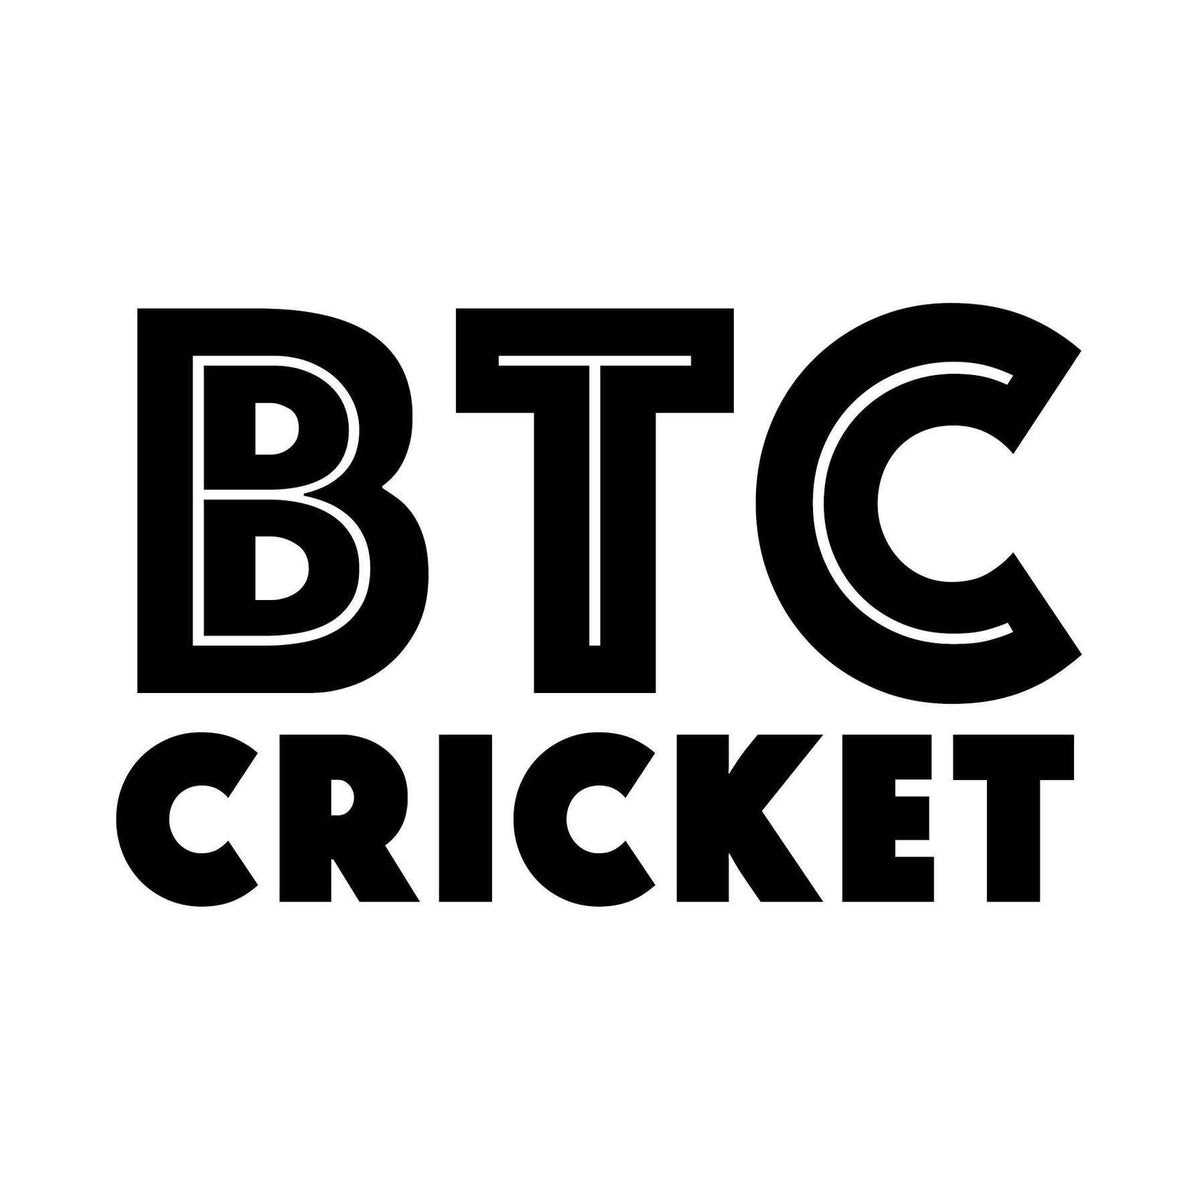 btc cricket